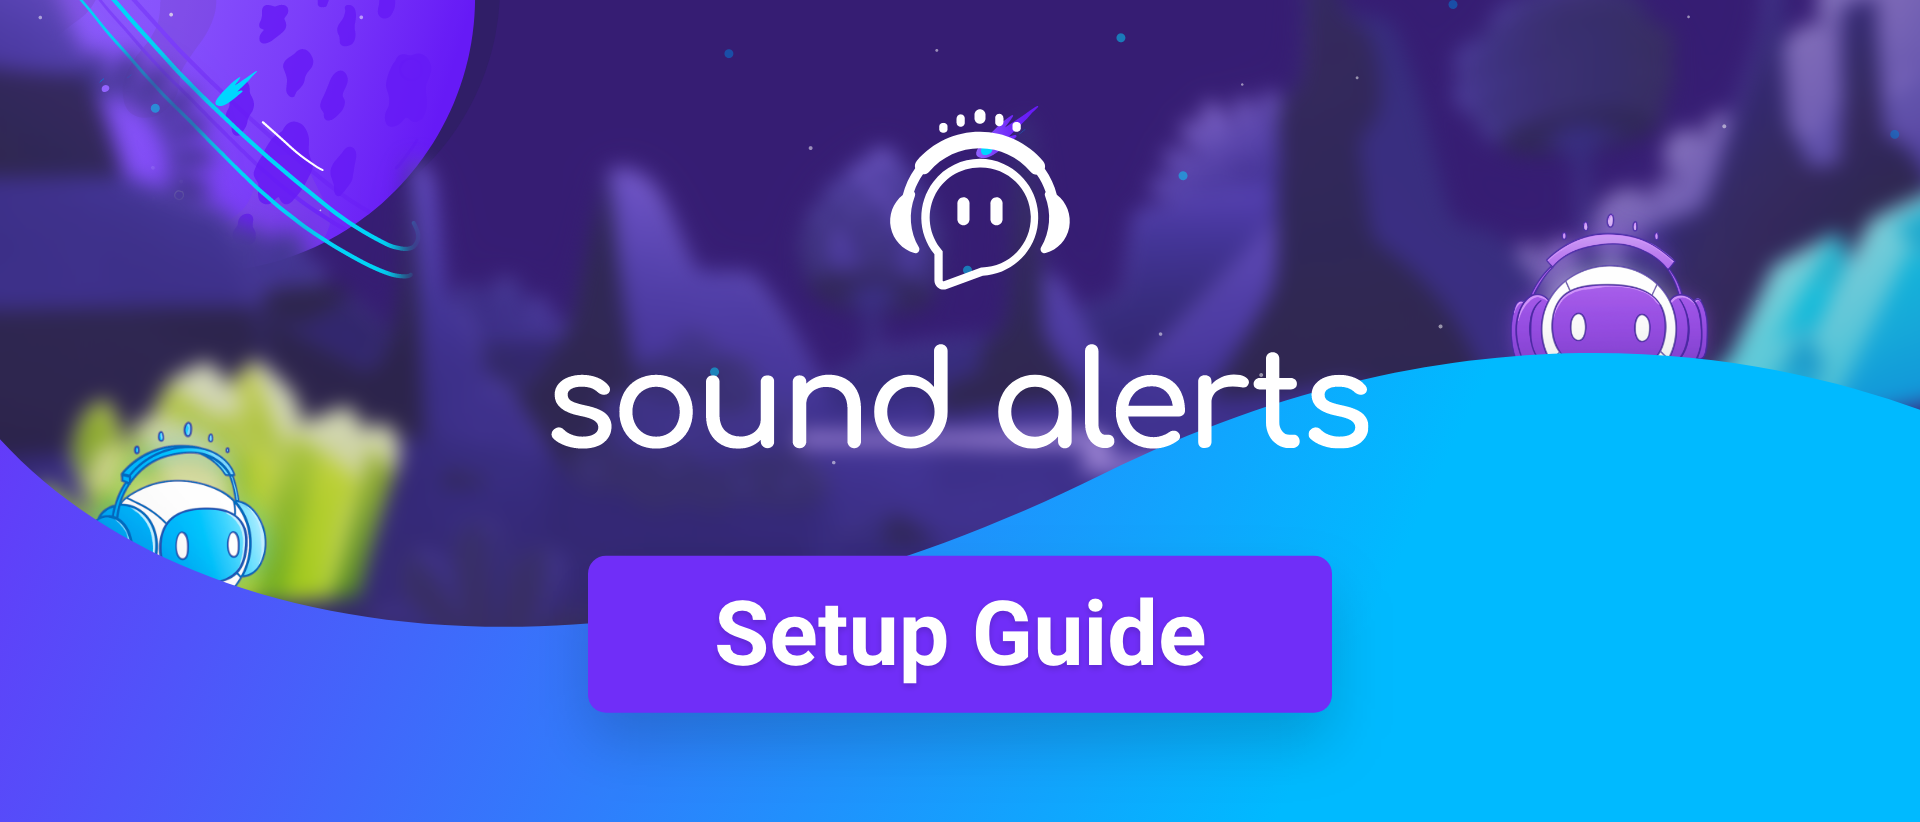 https://soundalerts-blog.b-cdn.net/Setup_Guide_21x9_4e11427dee/Setup_Guide_21x9_4e11427dee.png